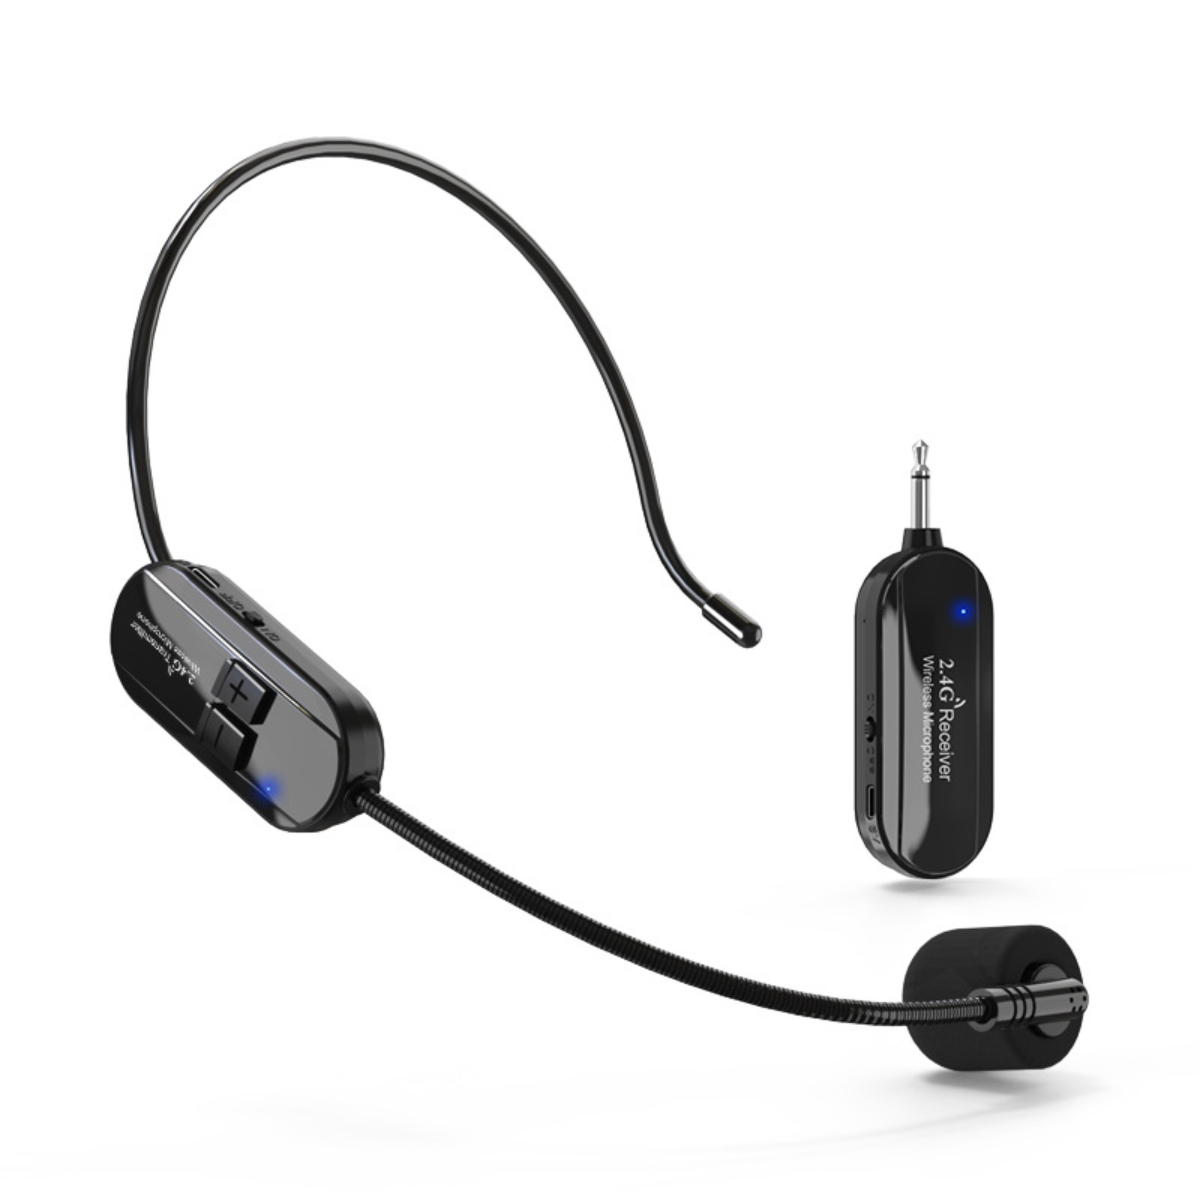 Headset ein 2.4G Mikrofon schwarz tow Kondensator-Headset BYTELIKE drahtlose zwei Headset-Mikrofon